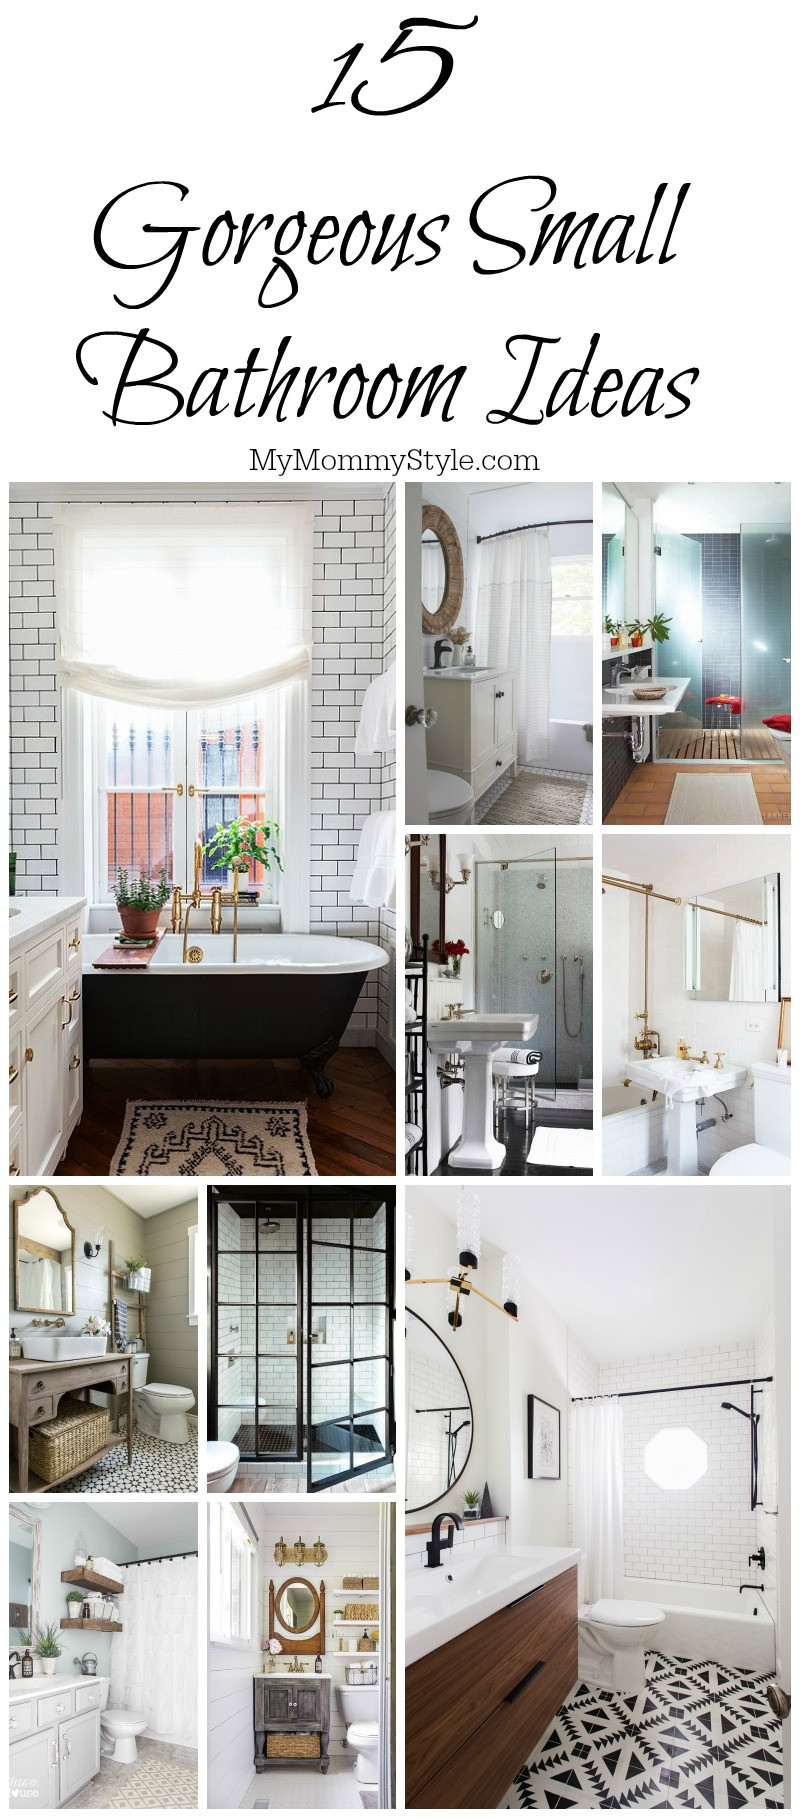 Bathroom Design Ideas Small
 25 beautiful master bedroom ideas My Mommy Style